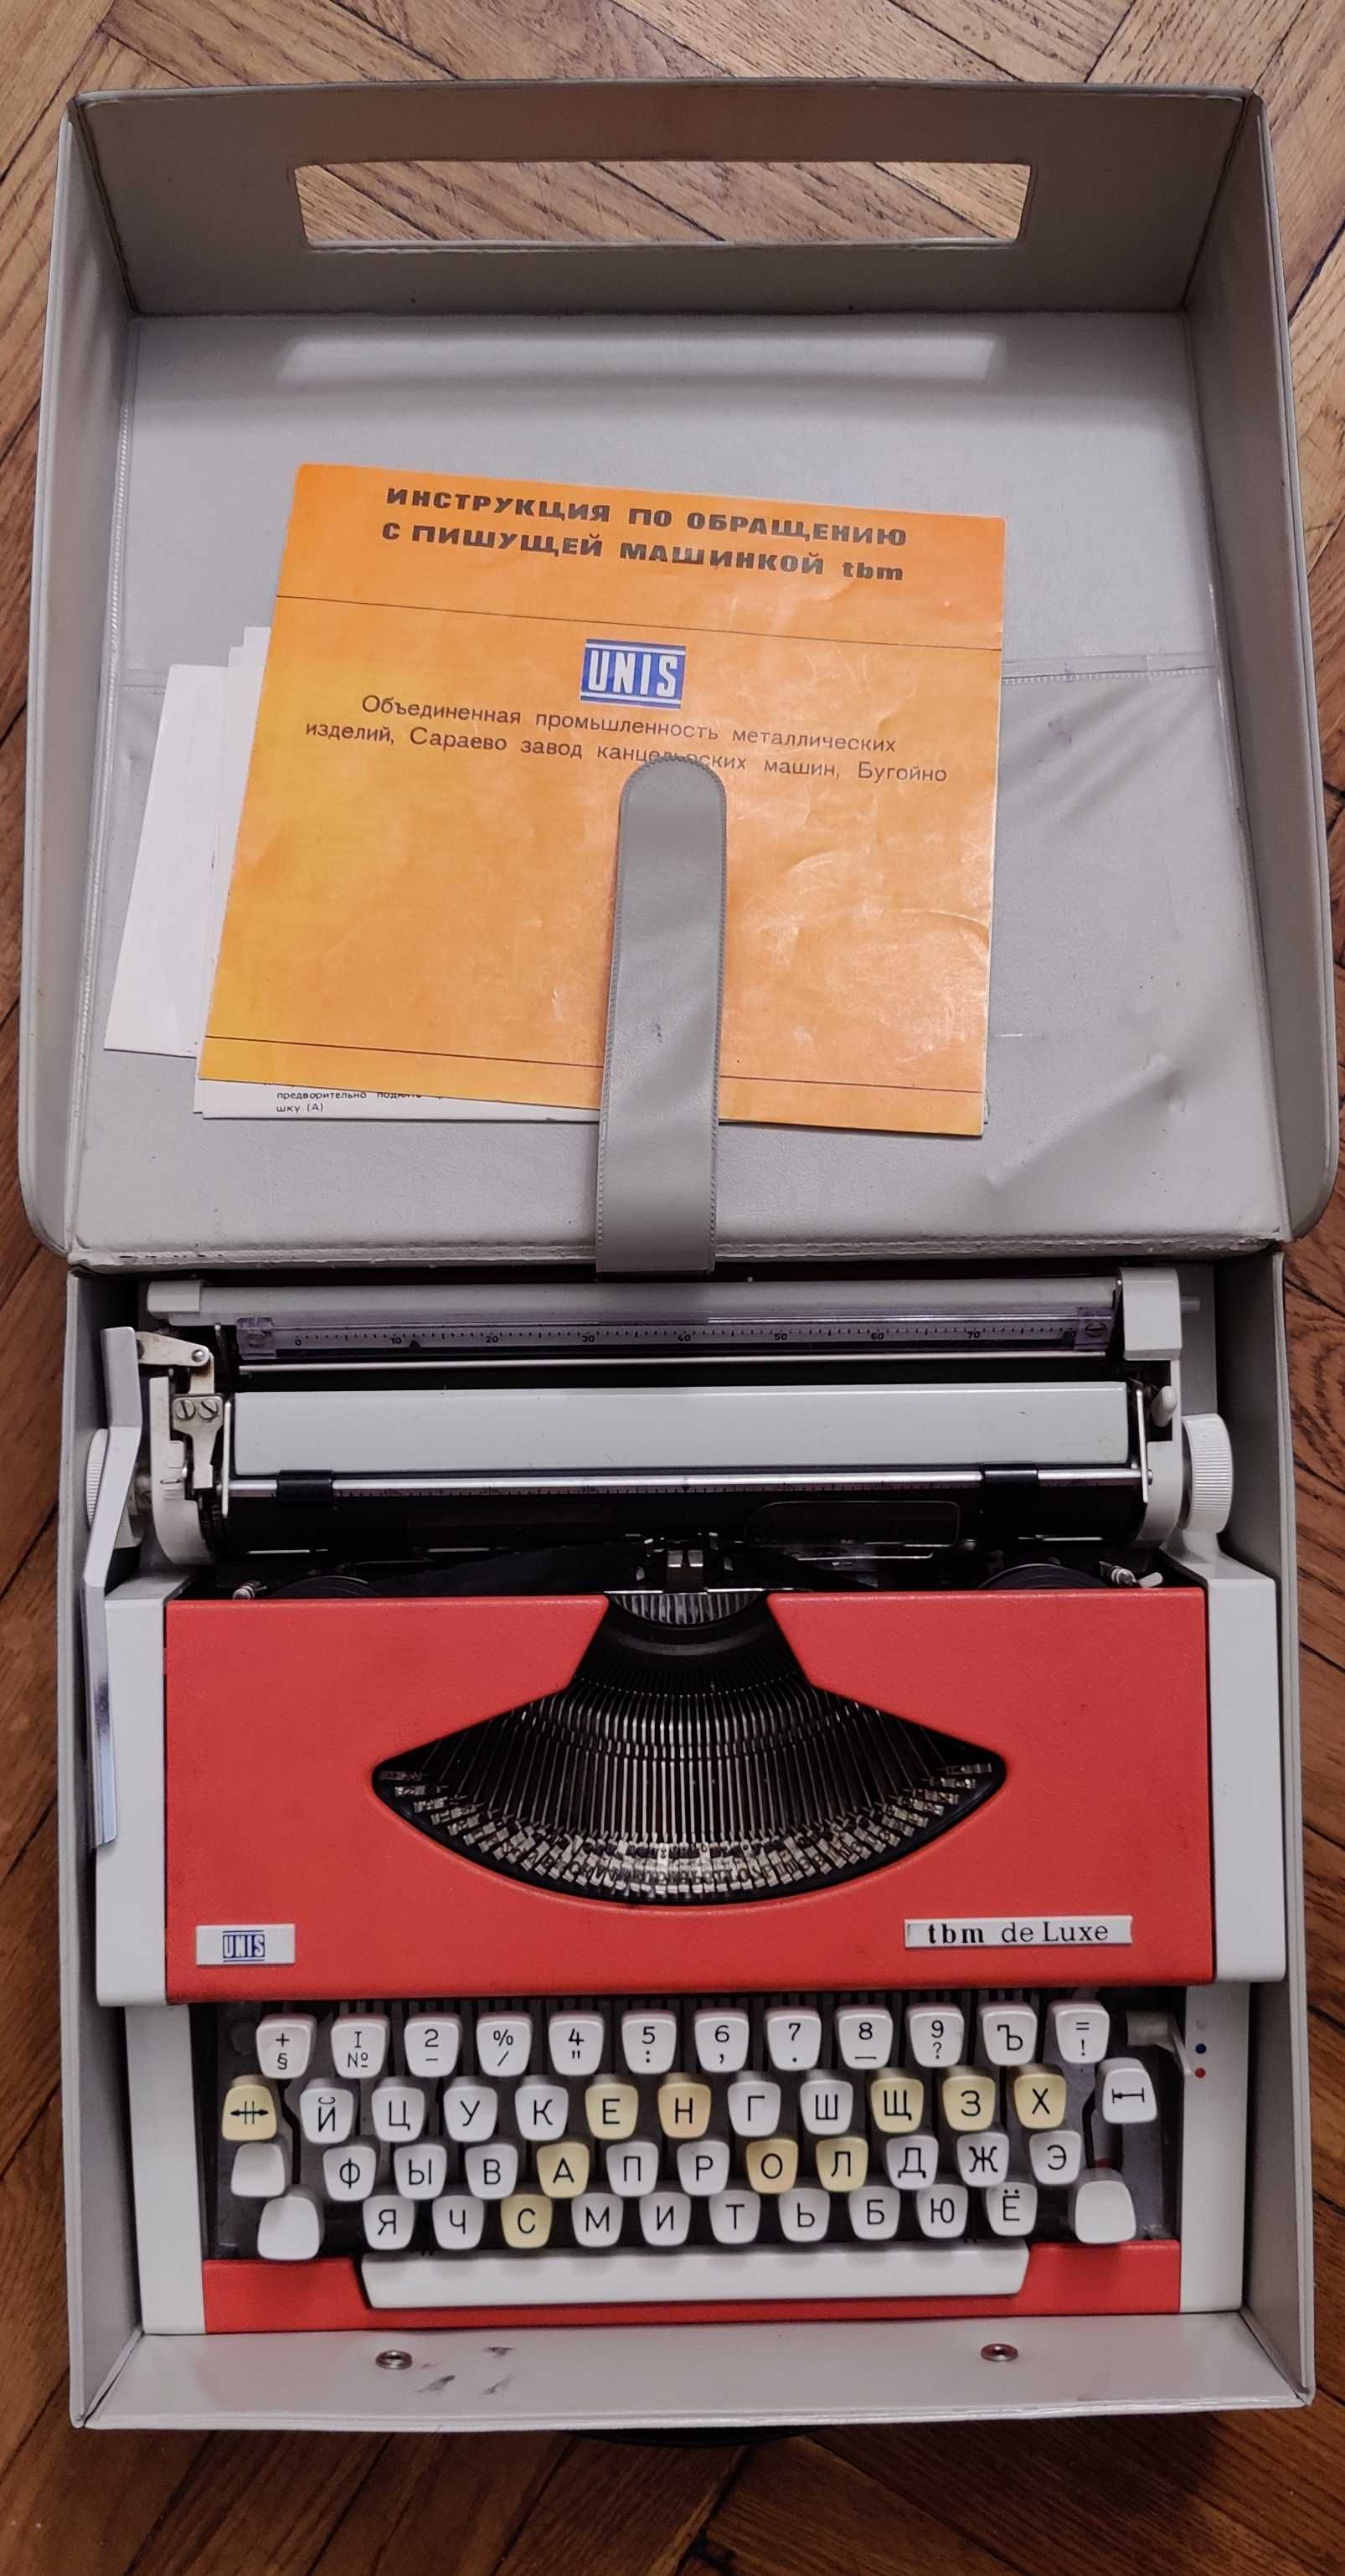 Печатна машинка UNIS TBM DE LUX. В комплекті кейс, інструкція